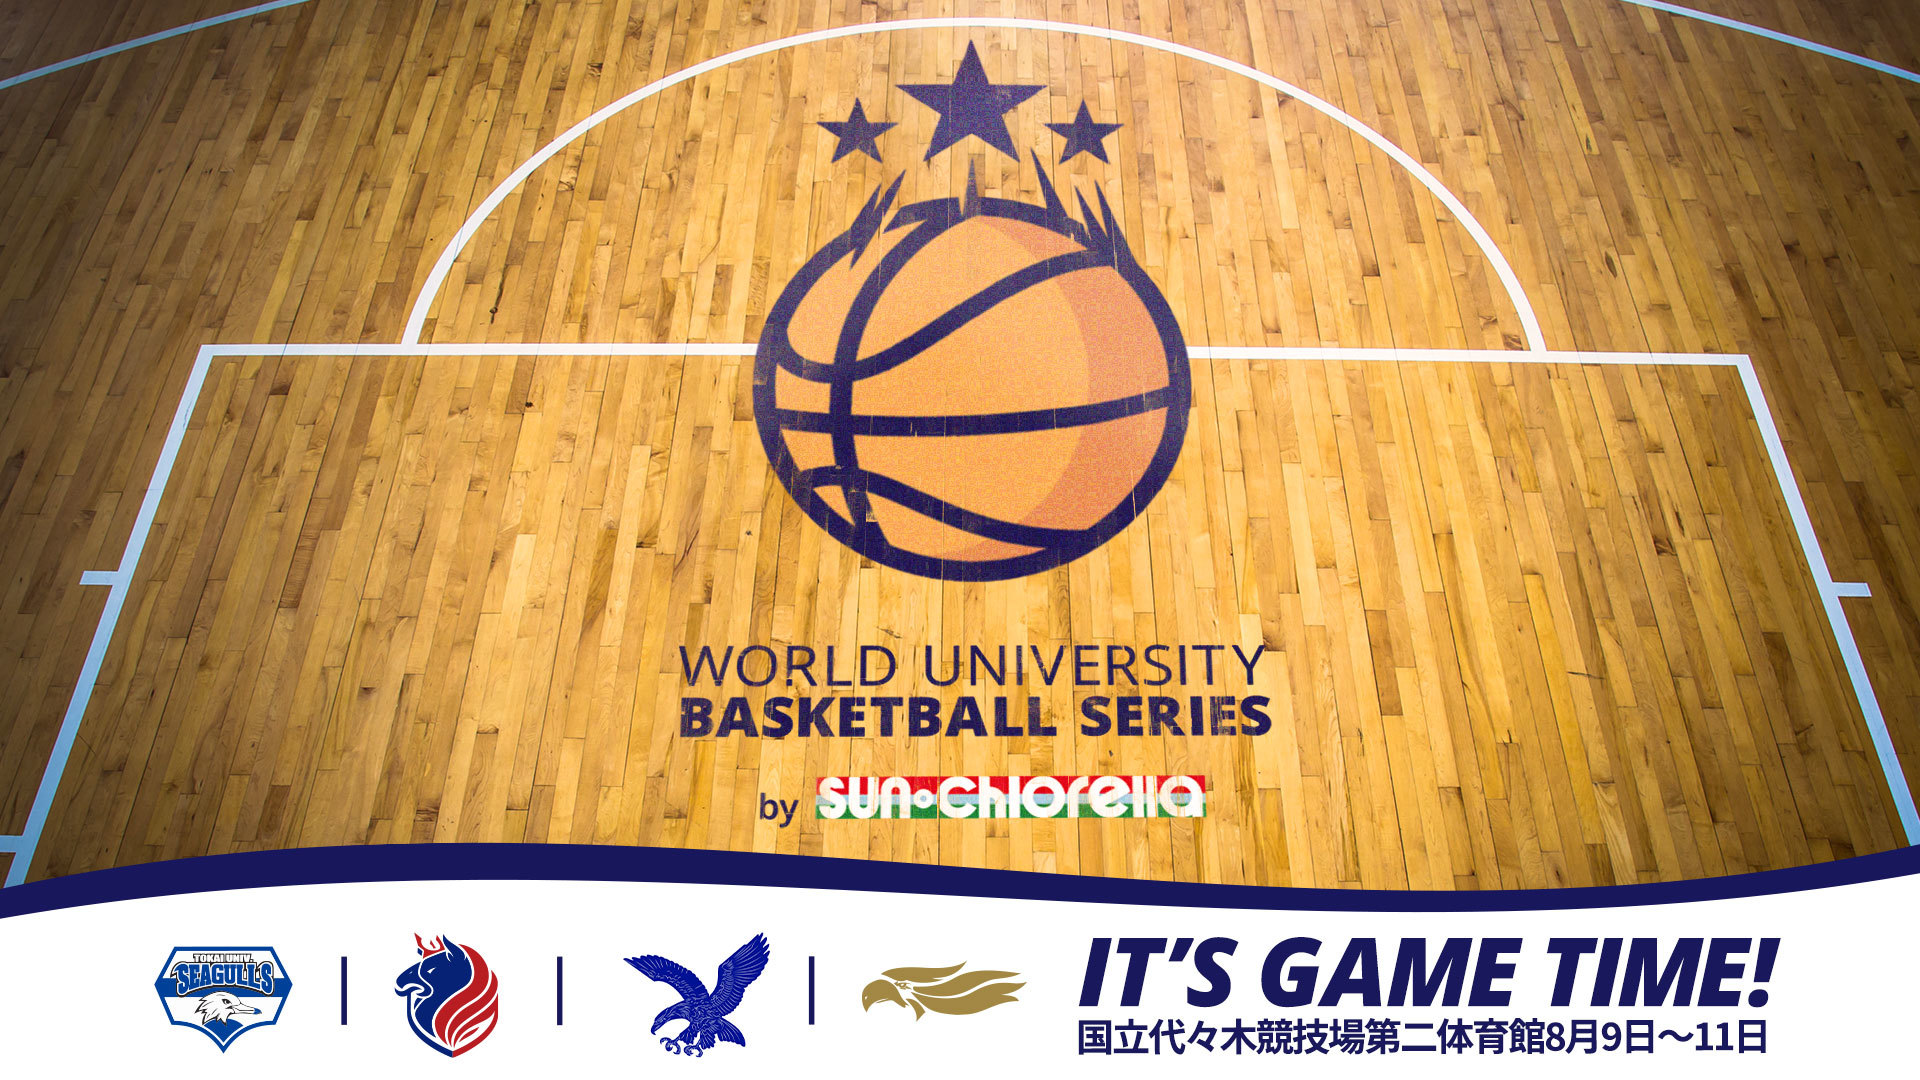 TENAuSun Chlorella presents World University Basketball Seriesṽ^Cgp[gi[Ɂ@` yVJUBFN8ɓŊJ `